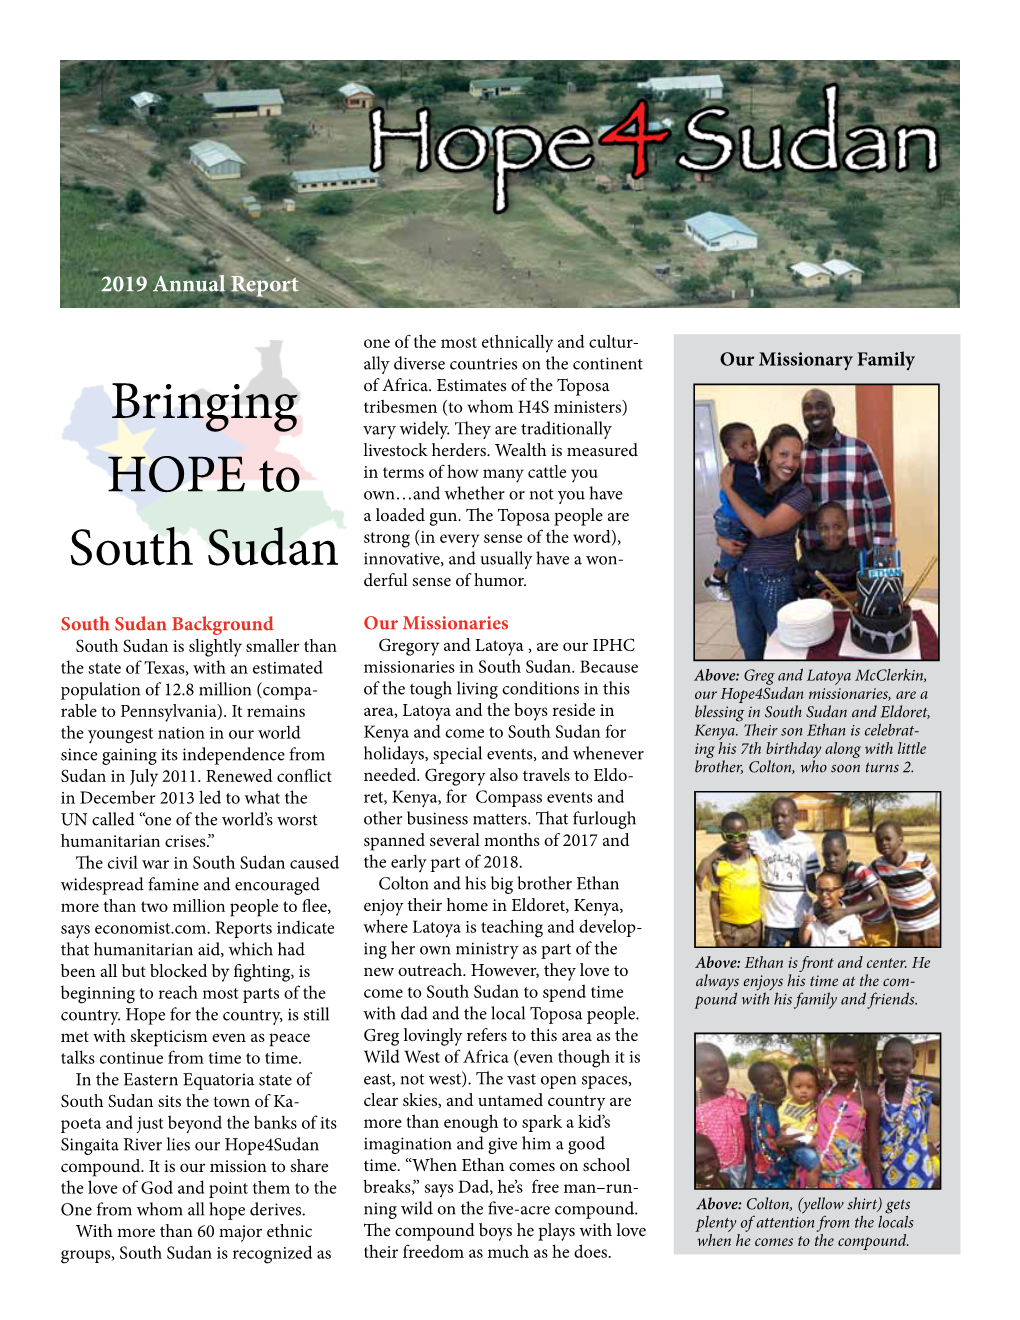 Bringing HOPE to South Sudan